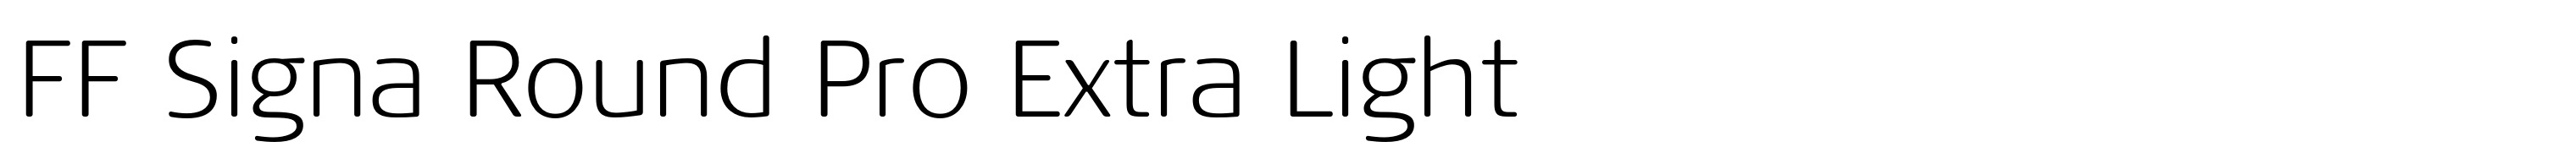 FF Signa Round Pro Extra Light